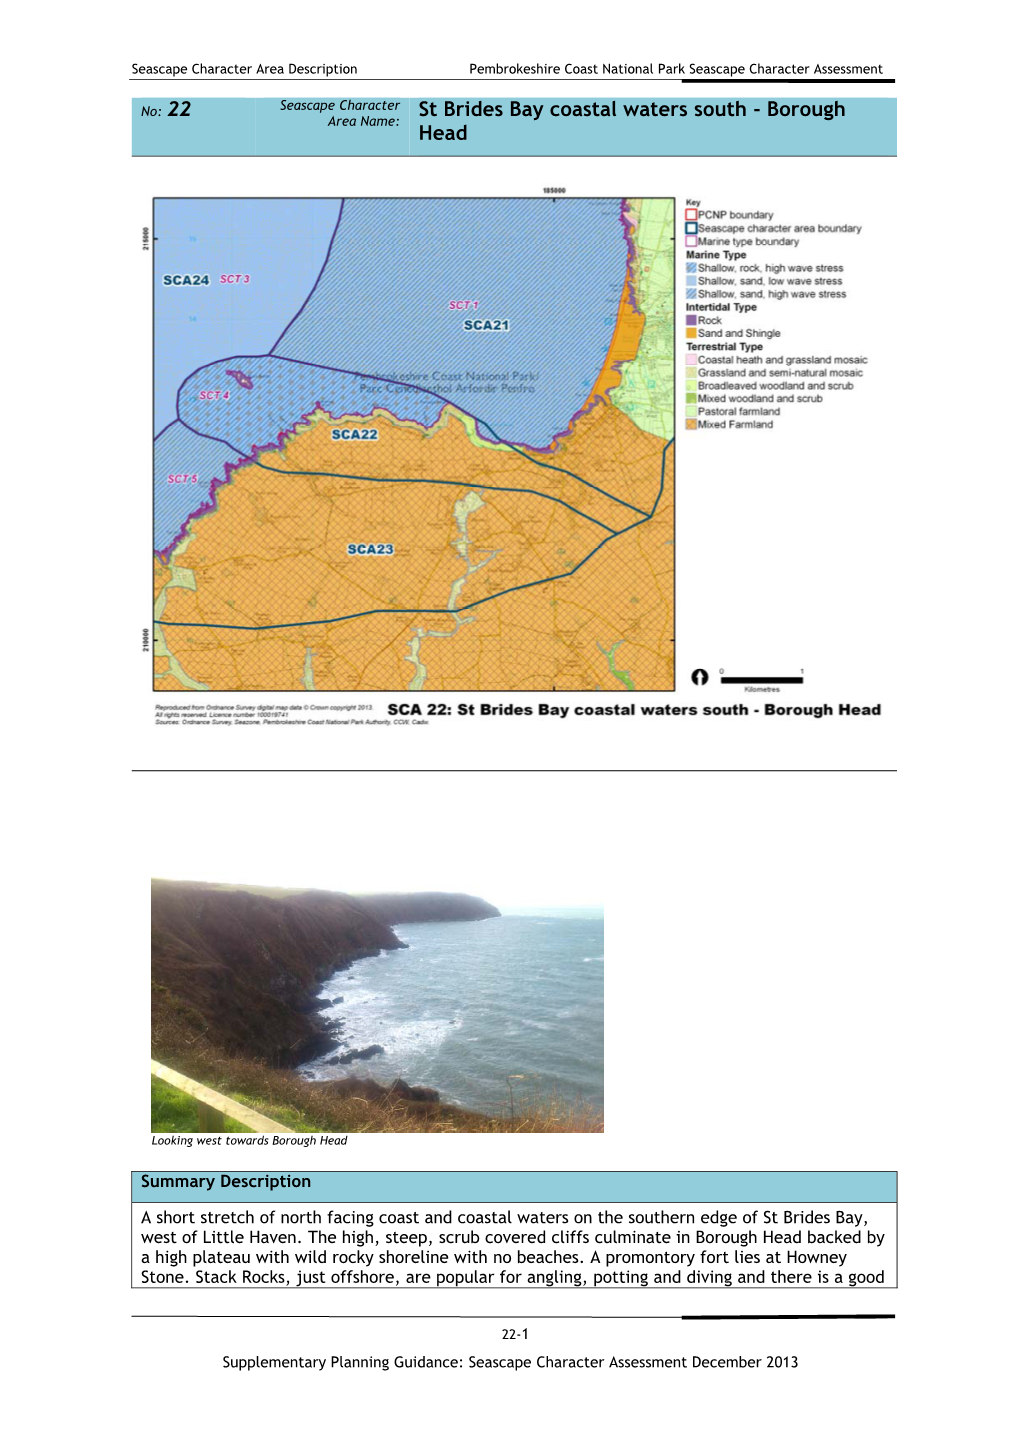 St Brides Bay Coastal Waters South - Borough Area Name: Head